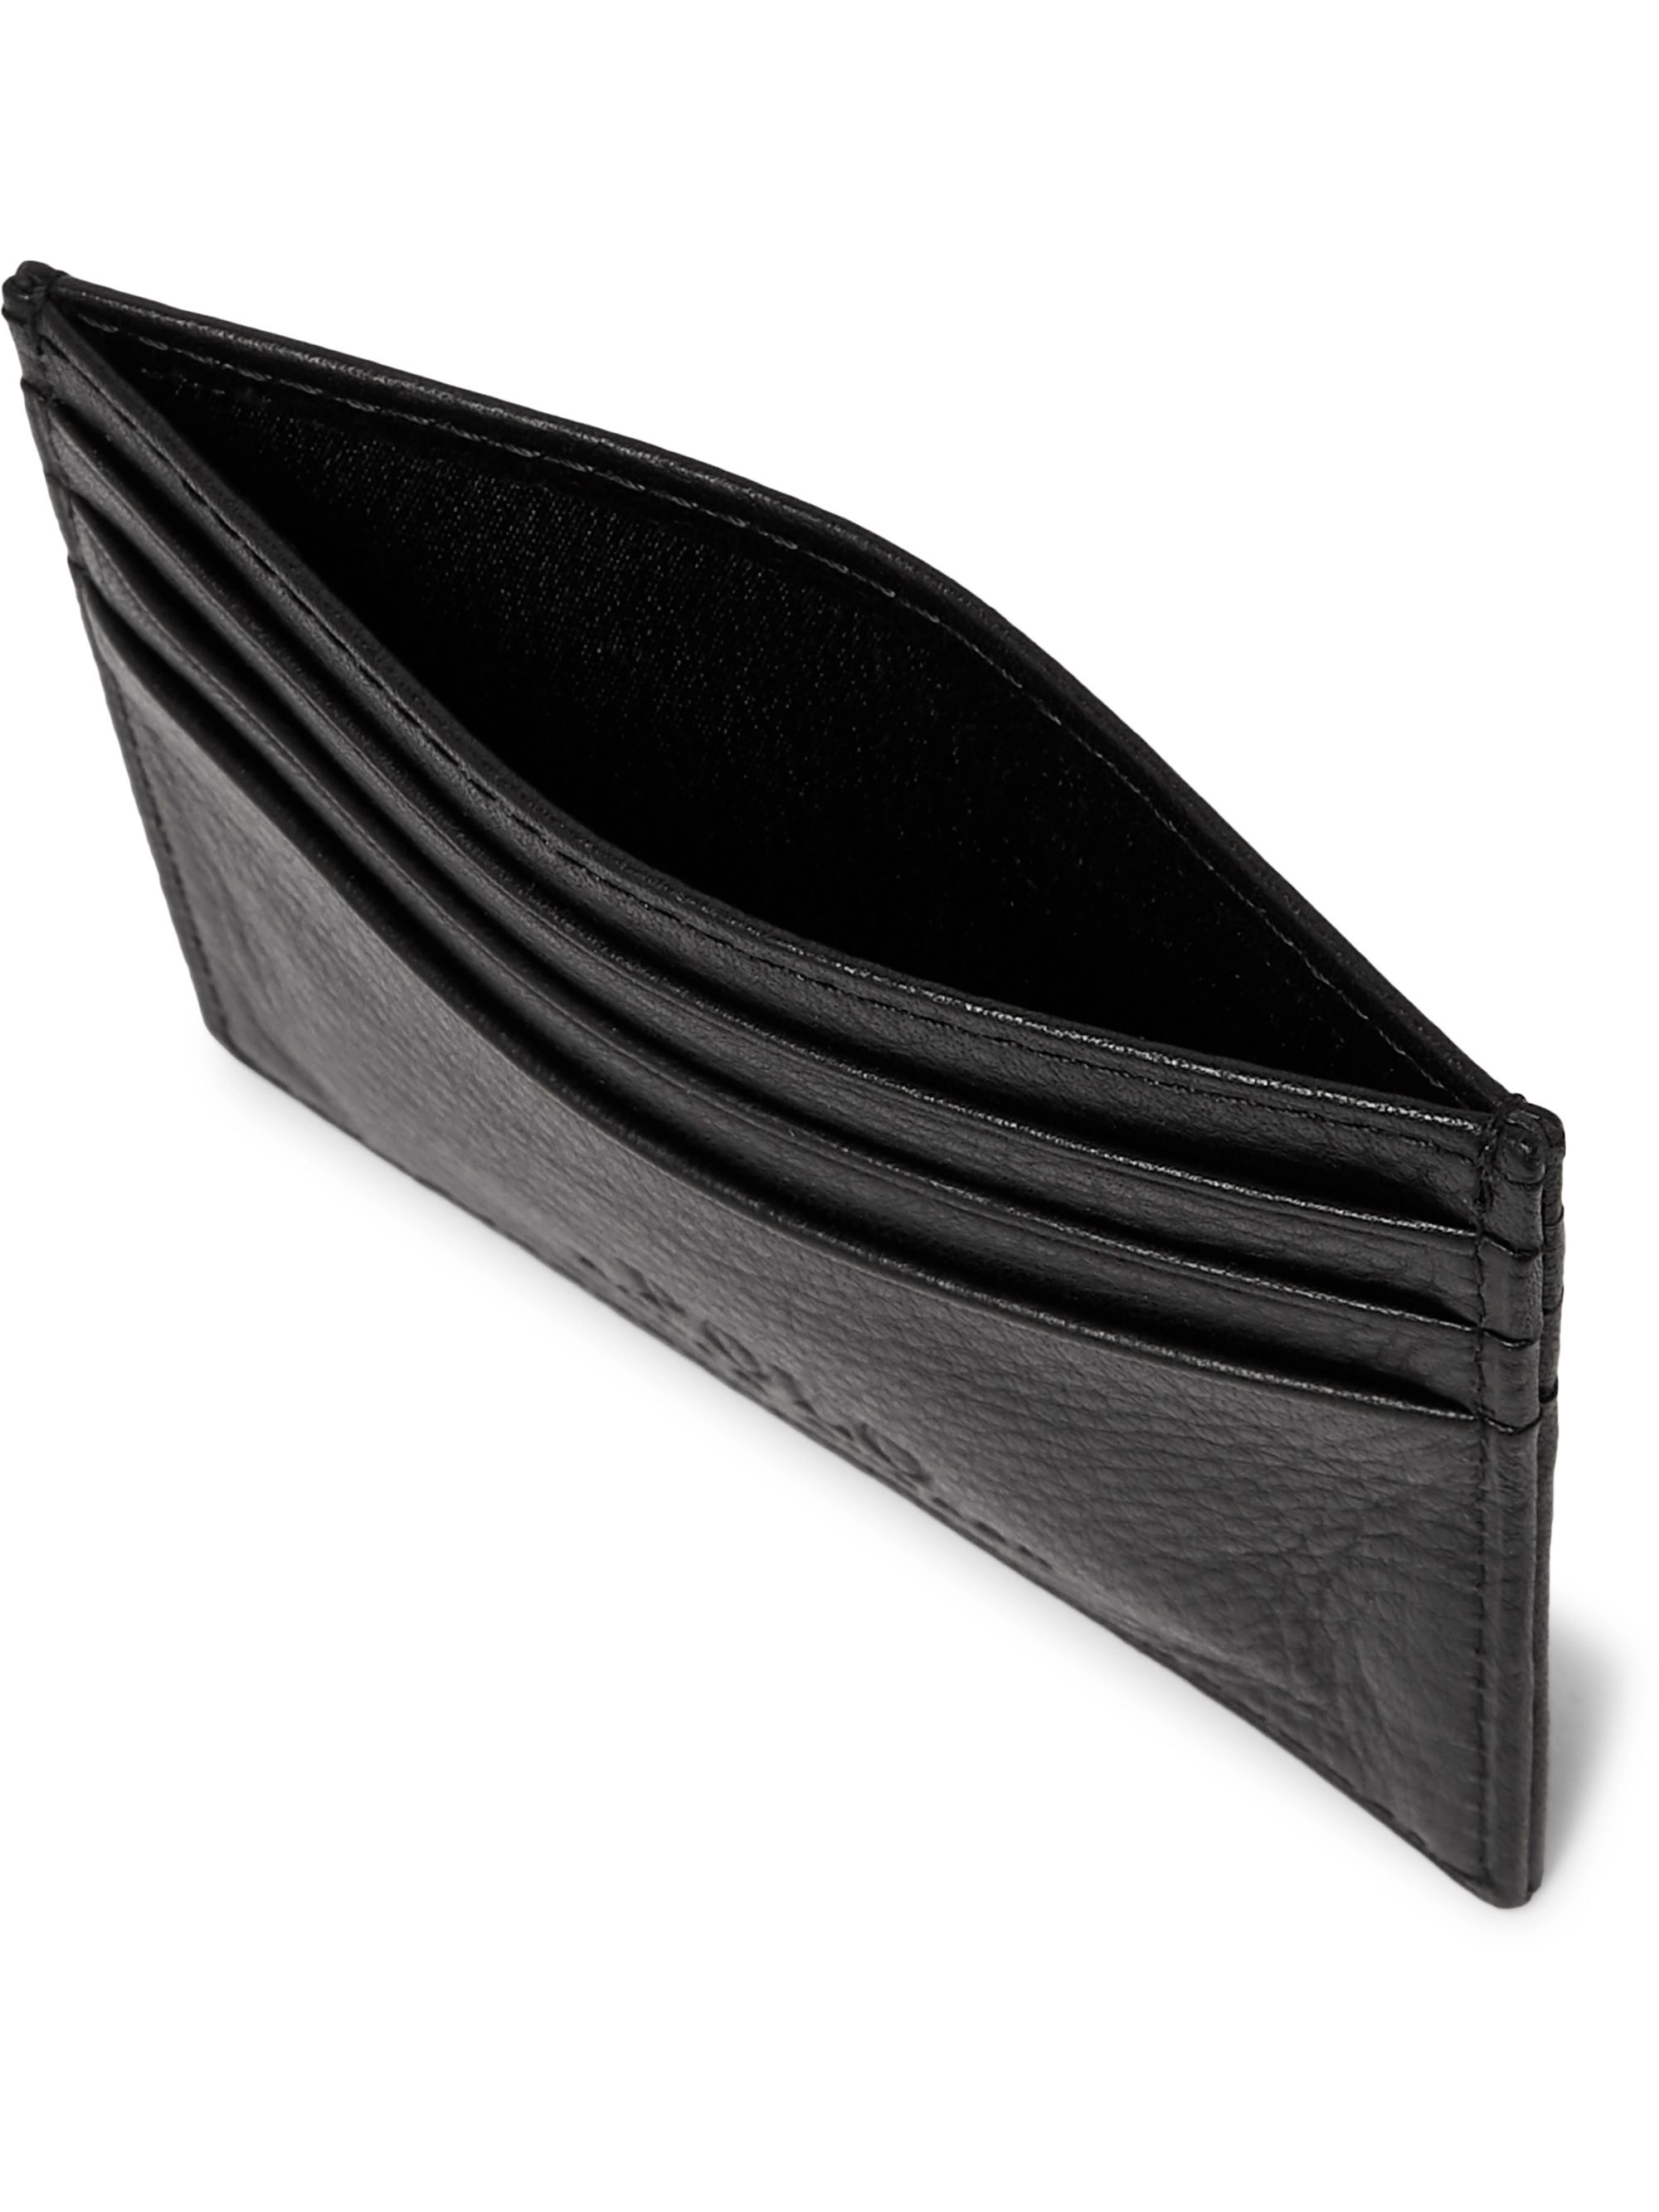 polo ralph lauren leather card holder